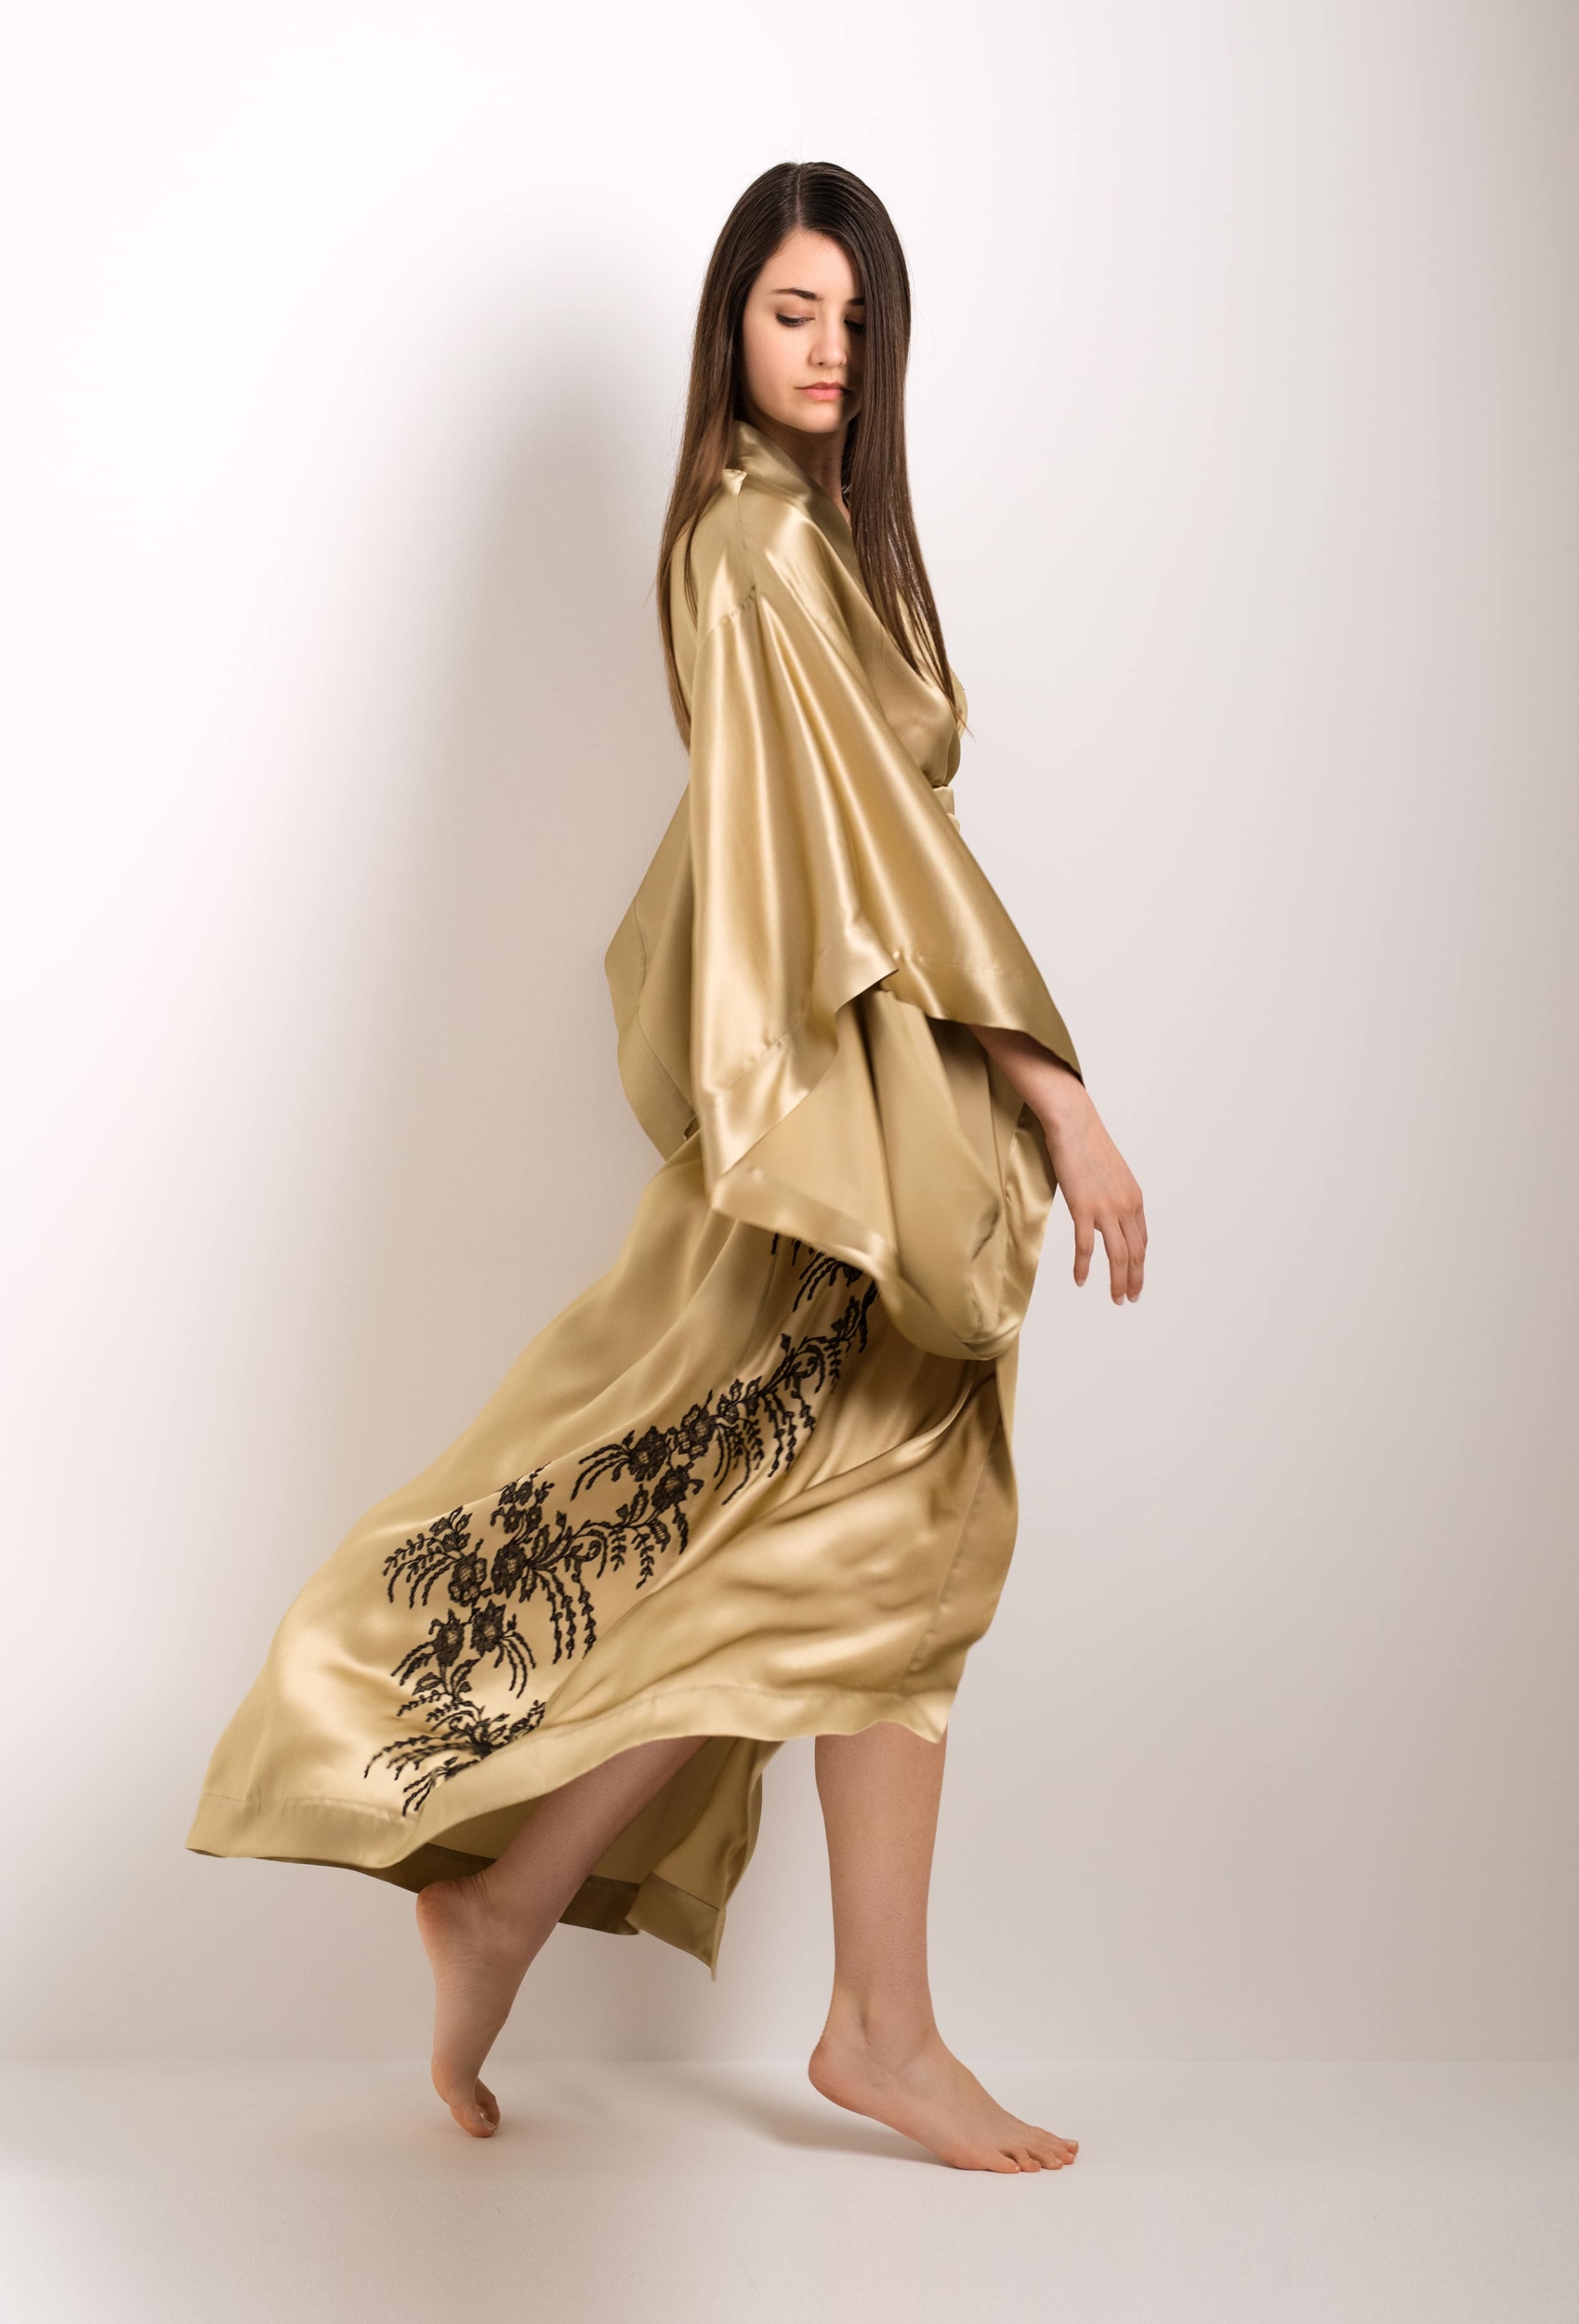 Long silk kimono - gold and black Venise Caudry lace - Carine Gilson